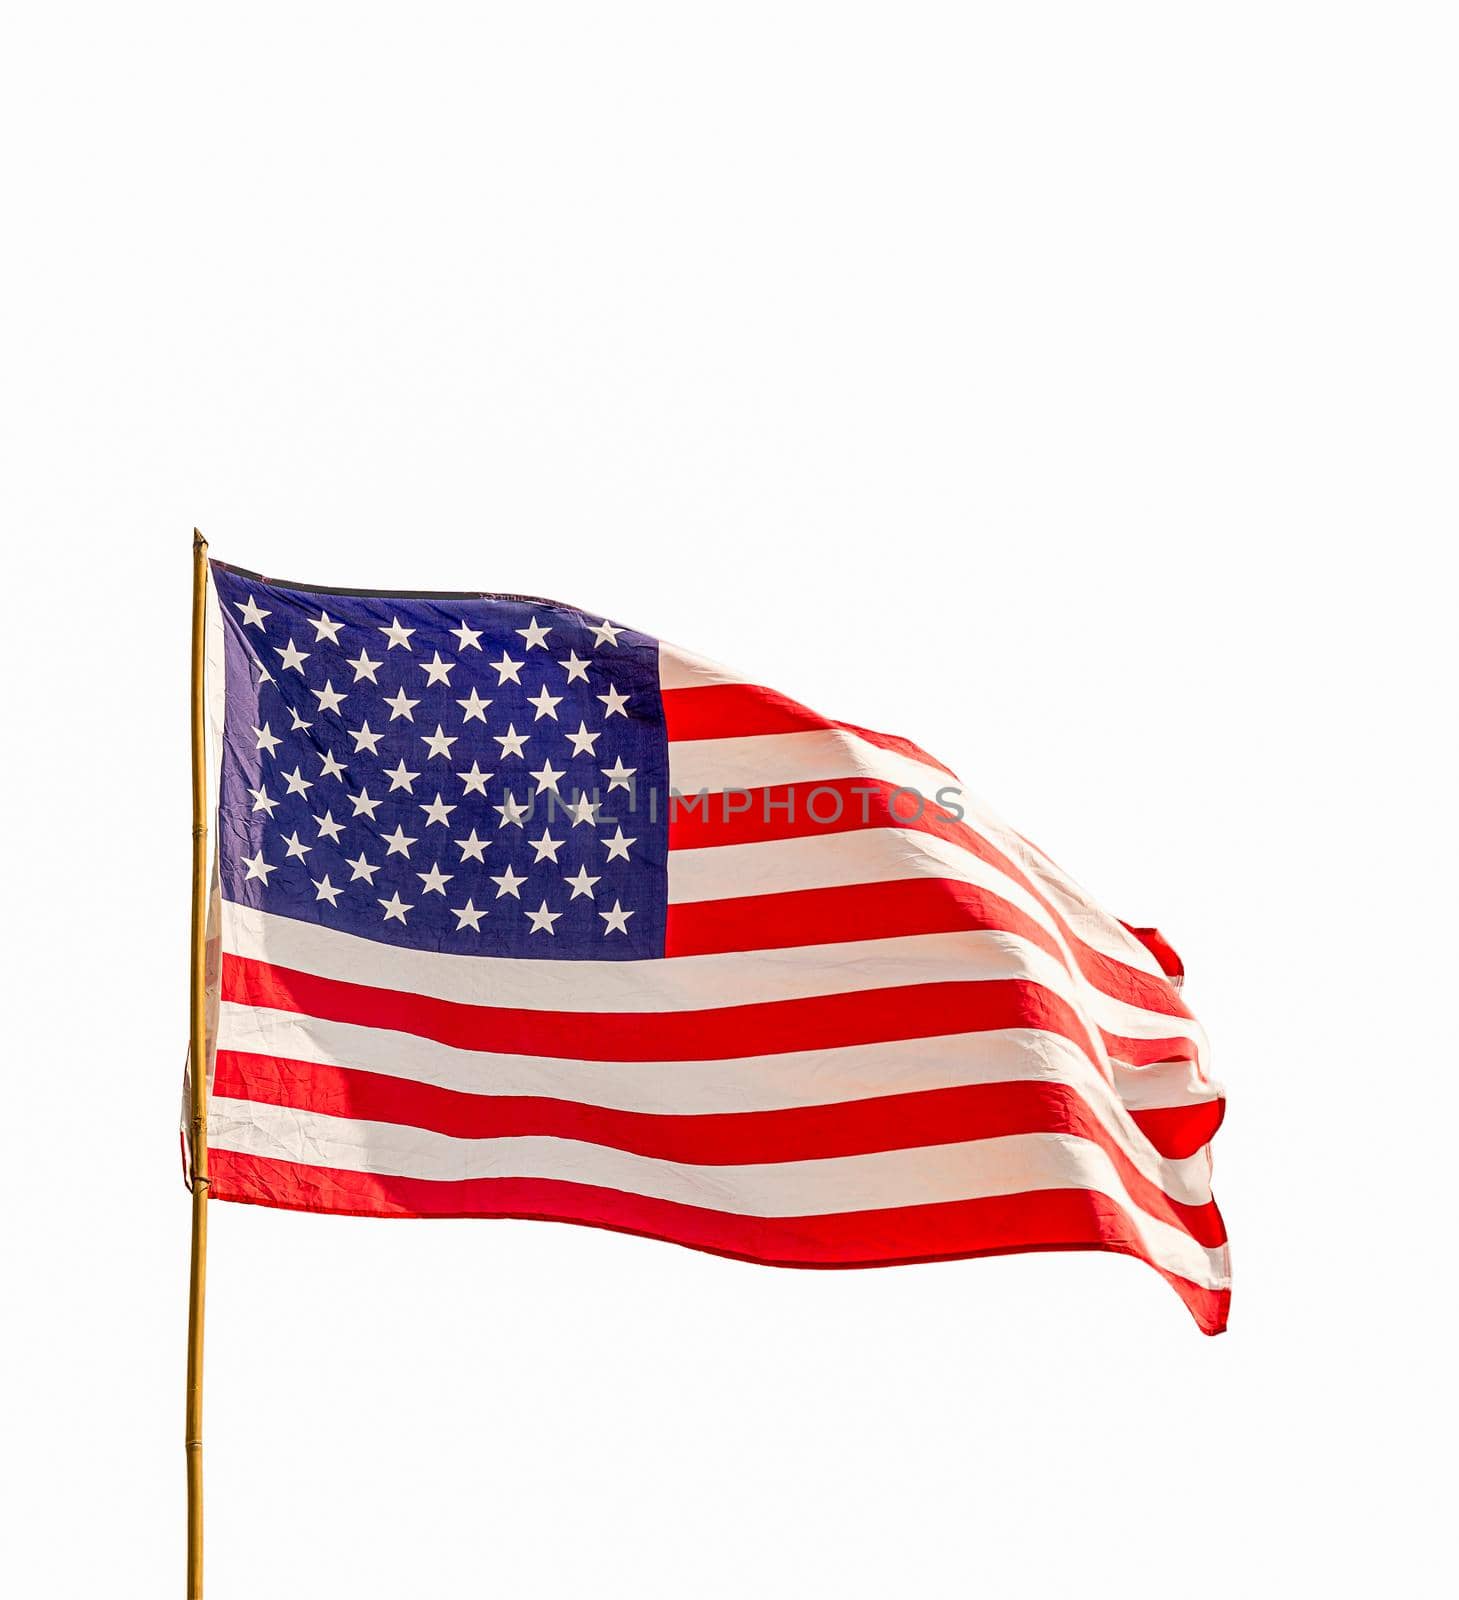 Flag of United States of America (USA) isolated on white background